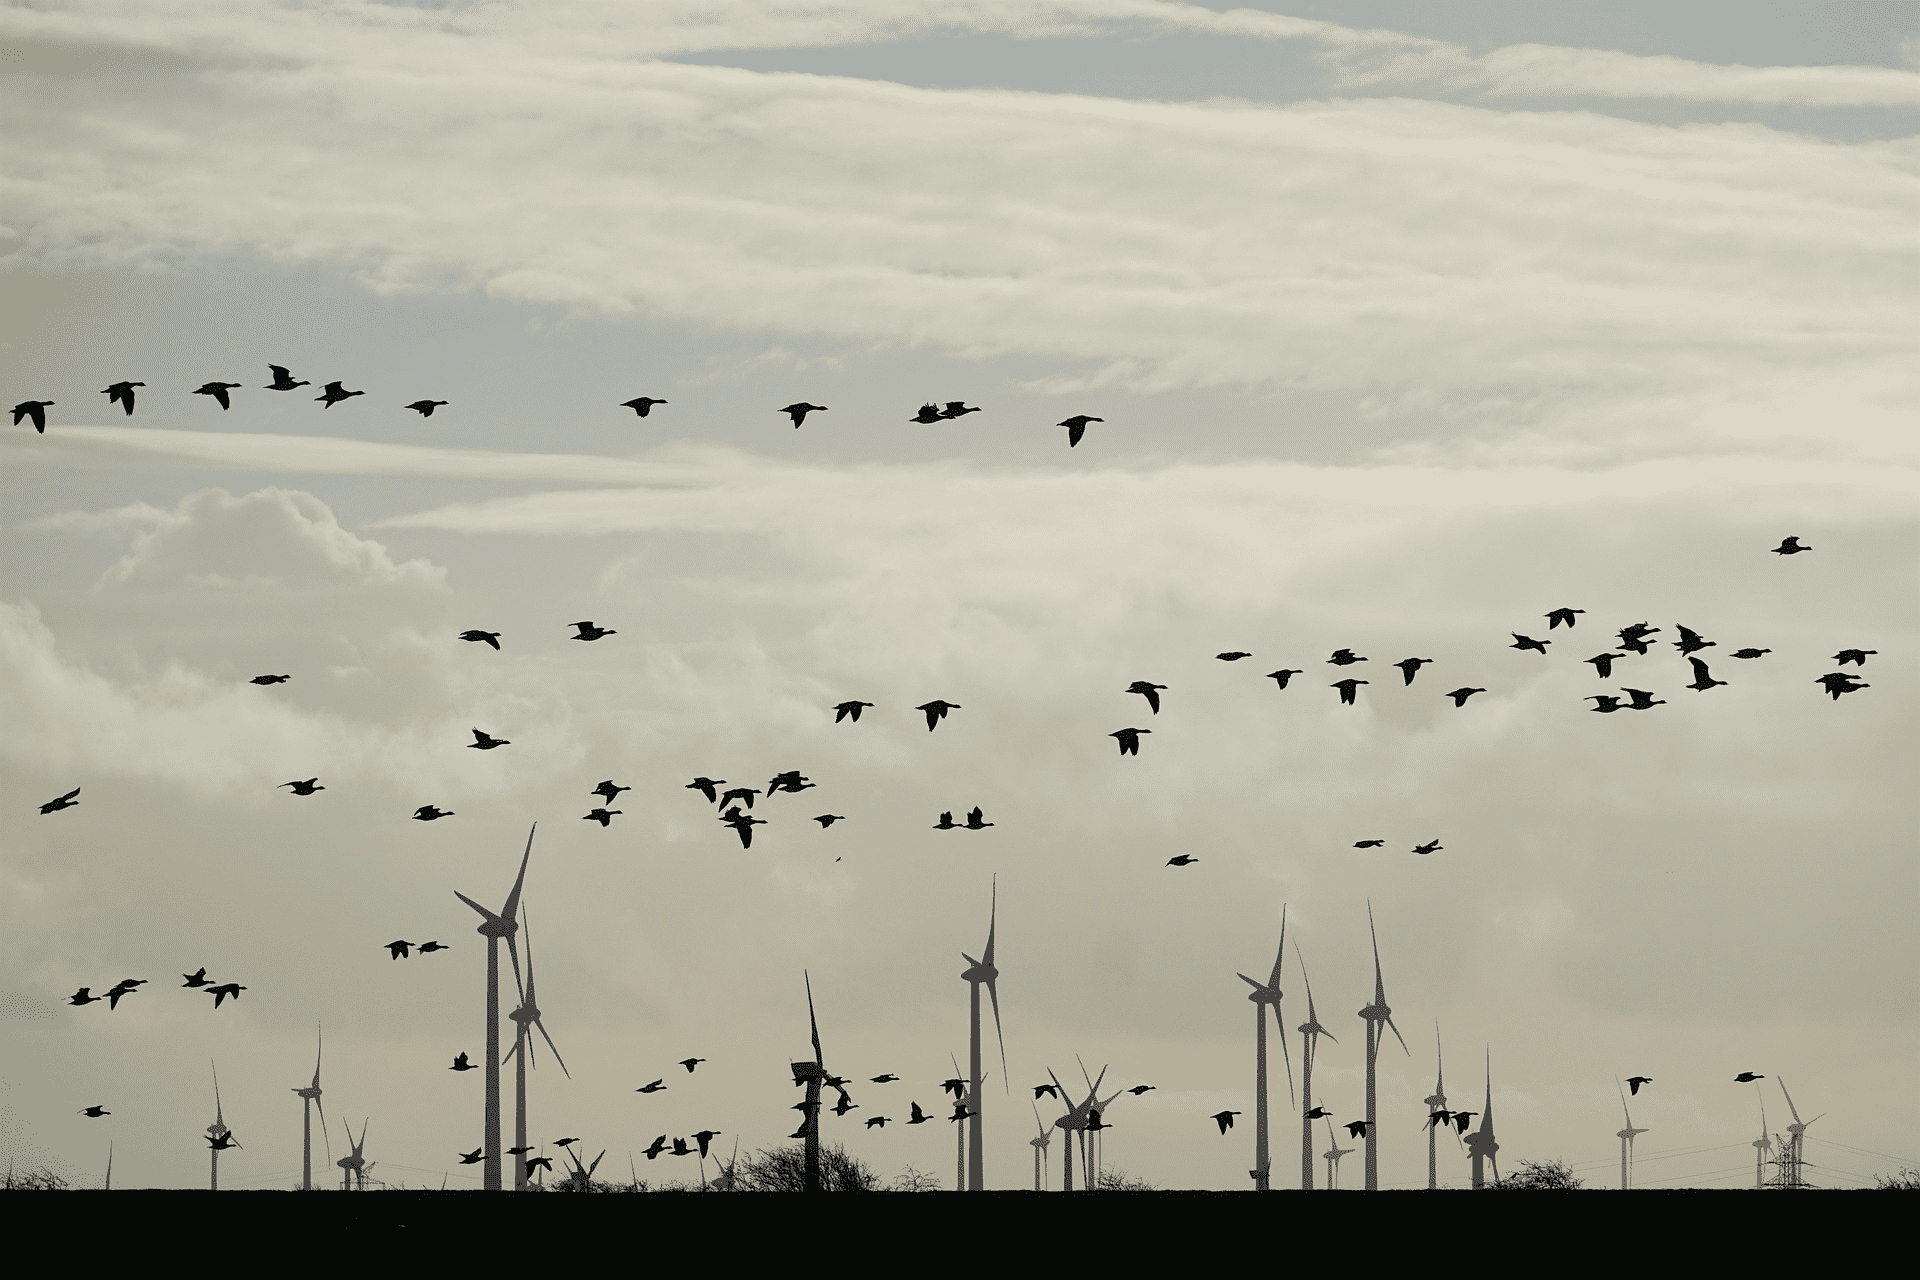 Spoor algorithms track and identify bird activity around wind farms